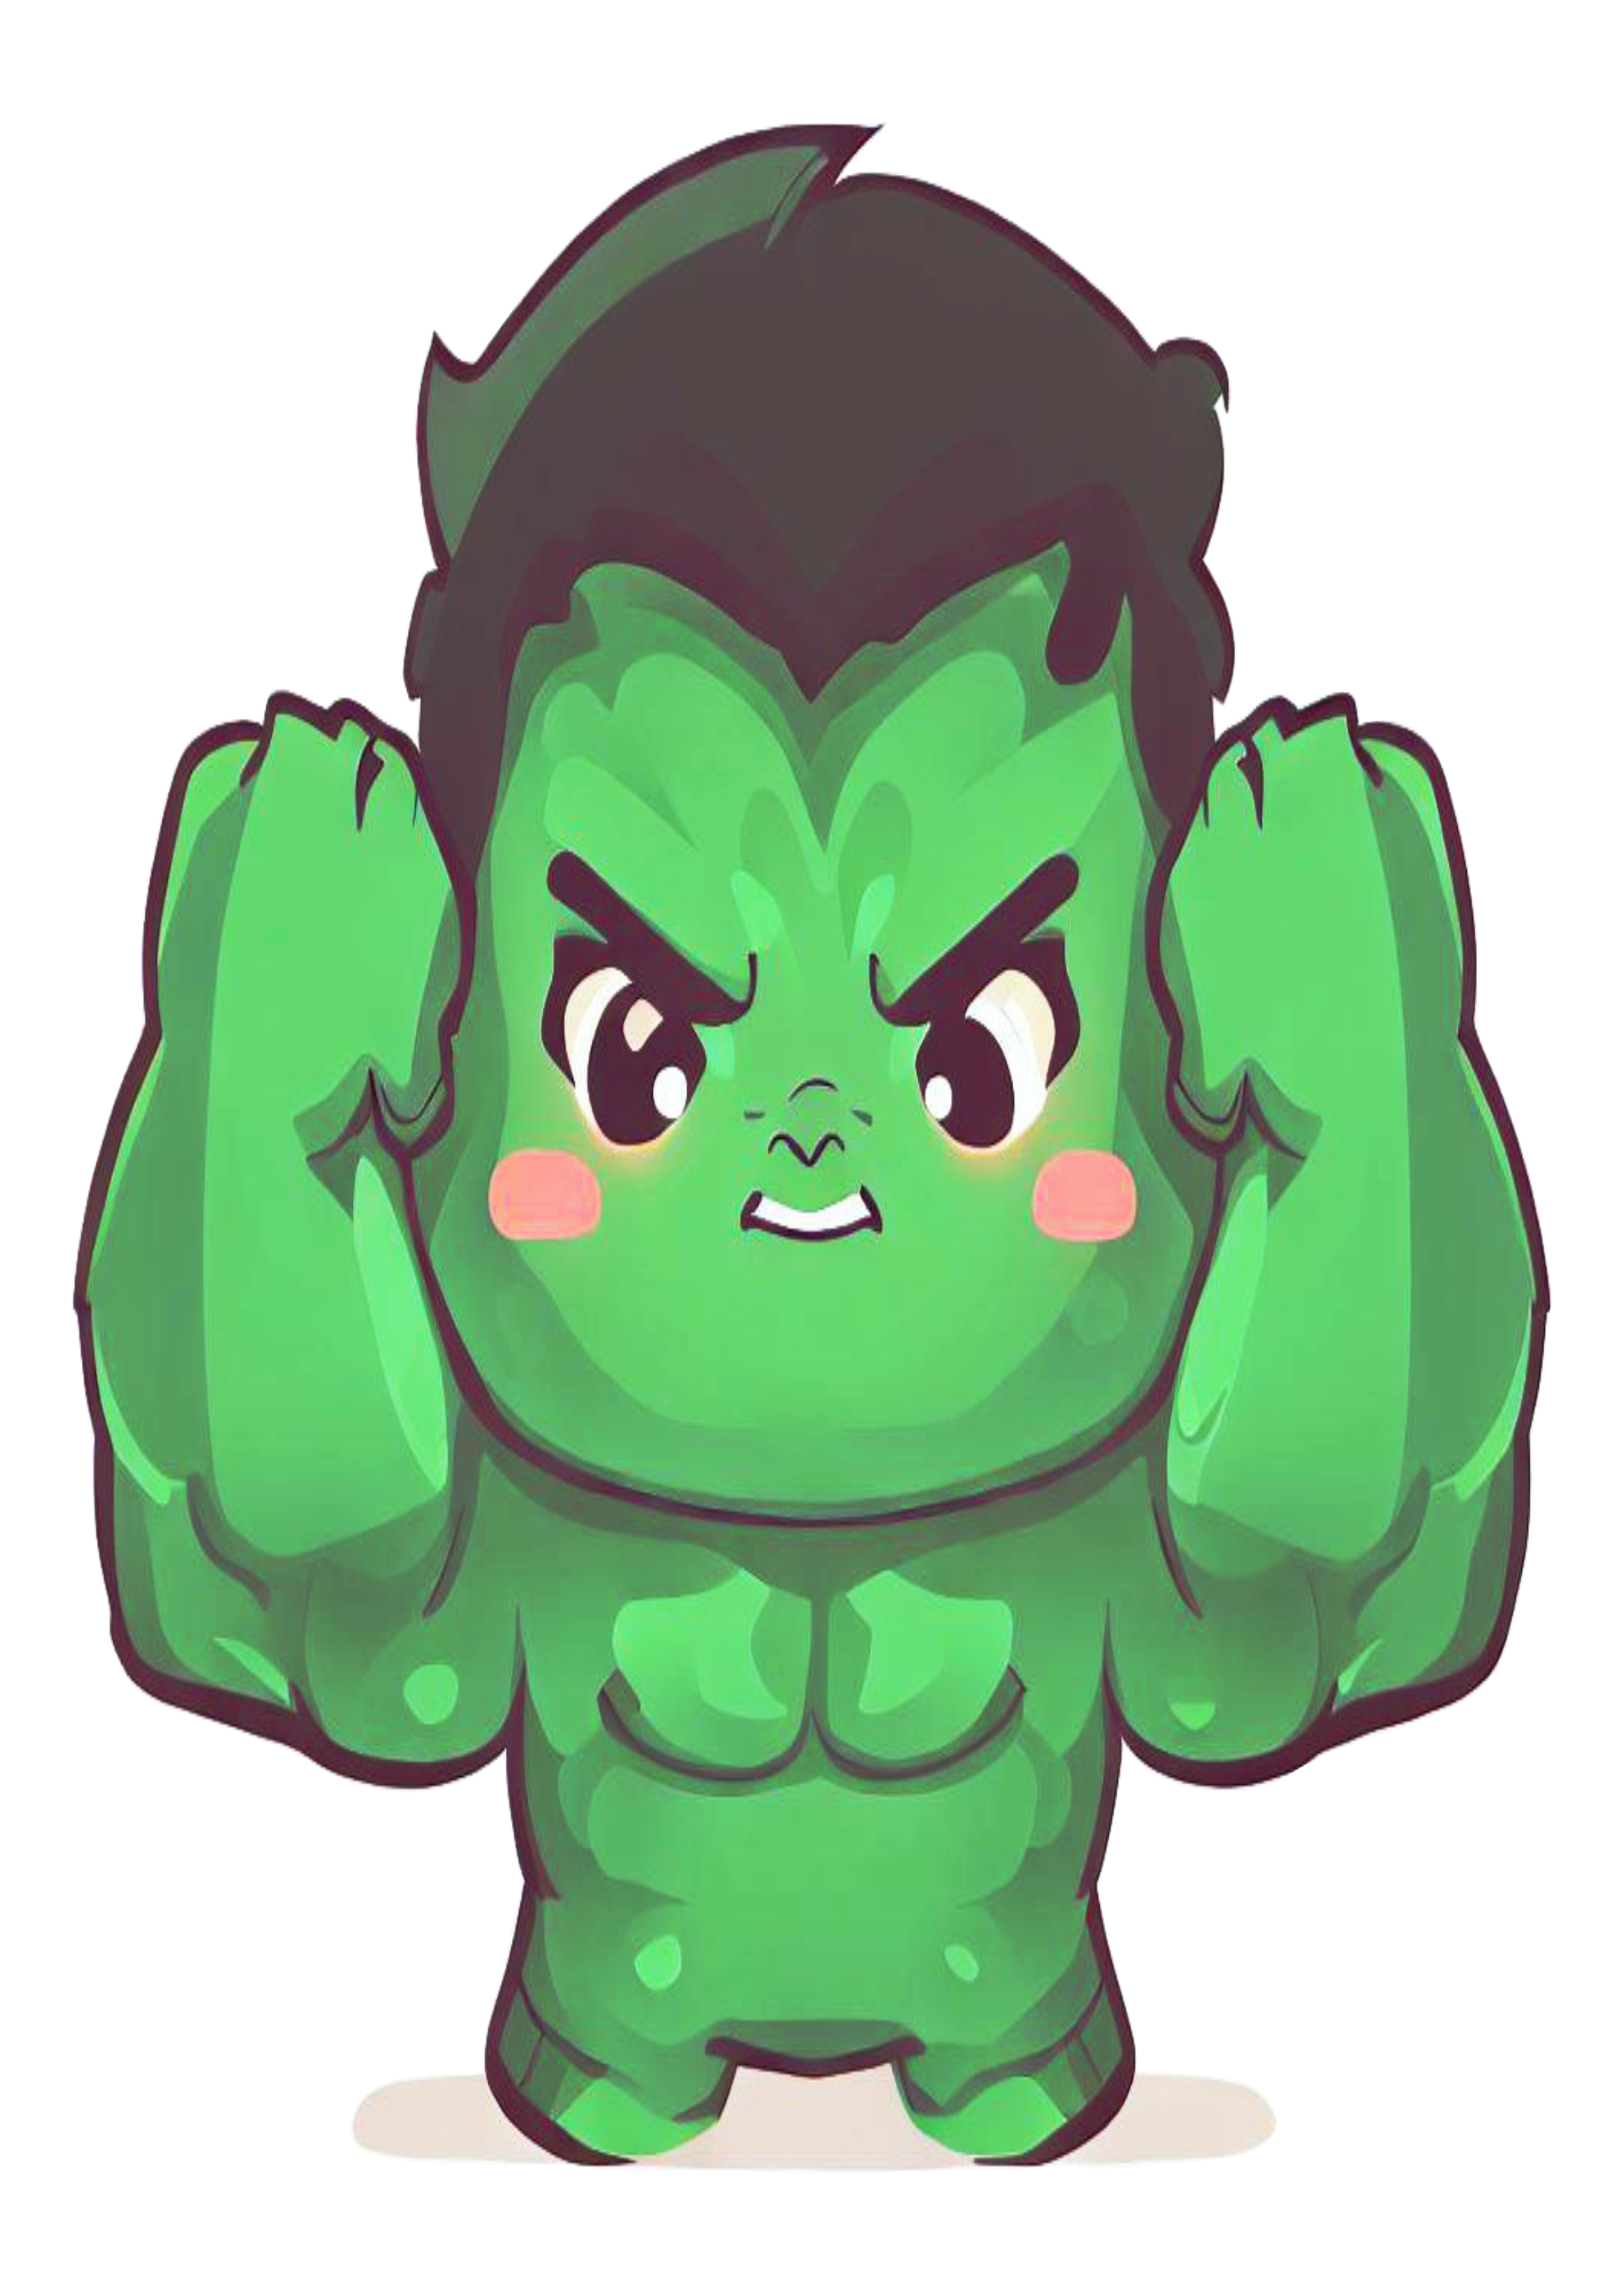 Hulk baby cute fofinho super heroi forte infantil bravo imagem sem fundo marvel studios online png